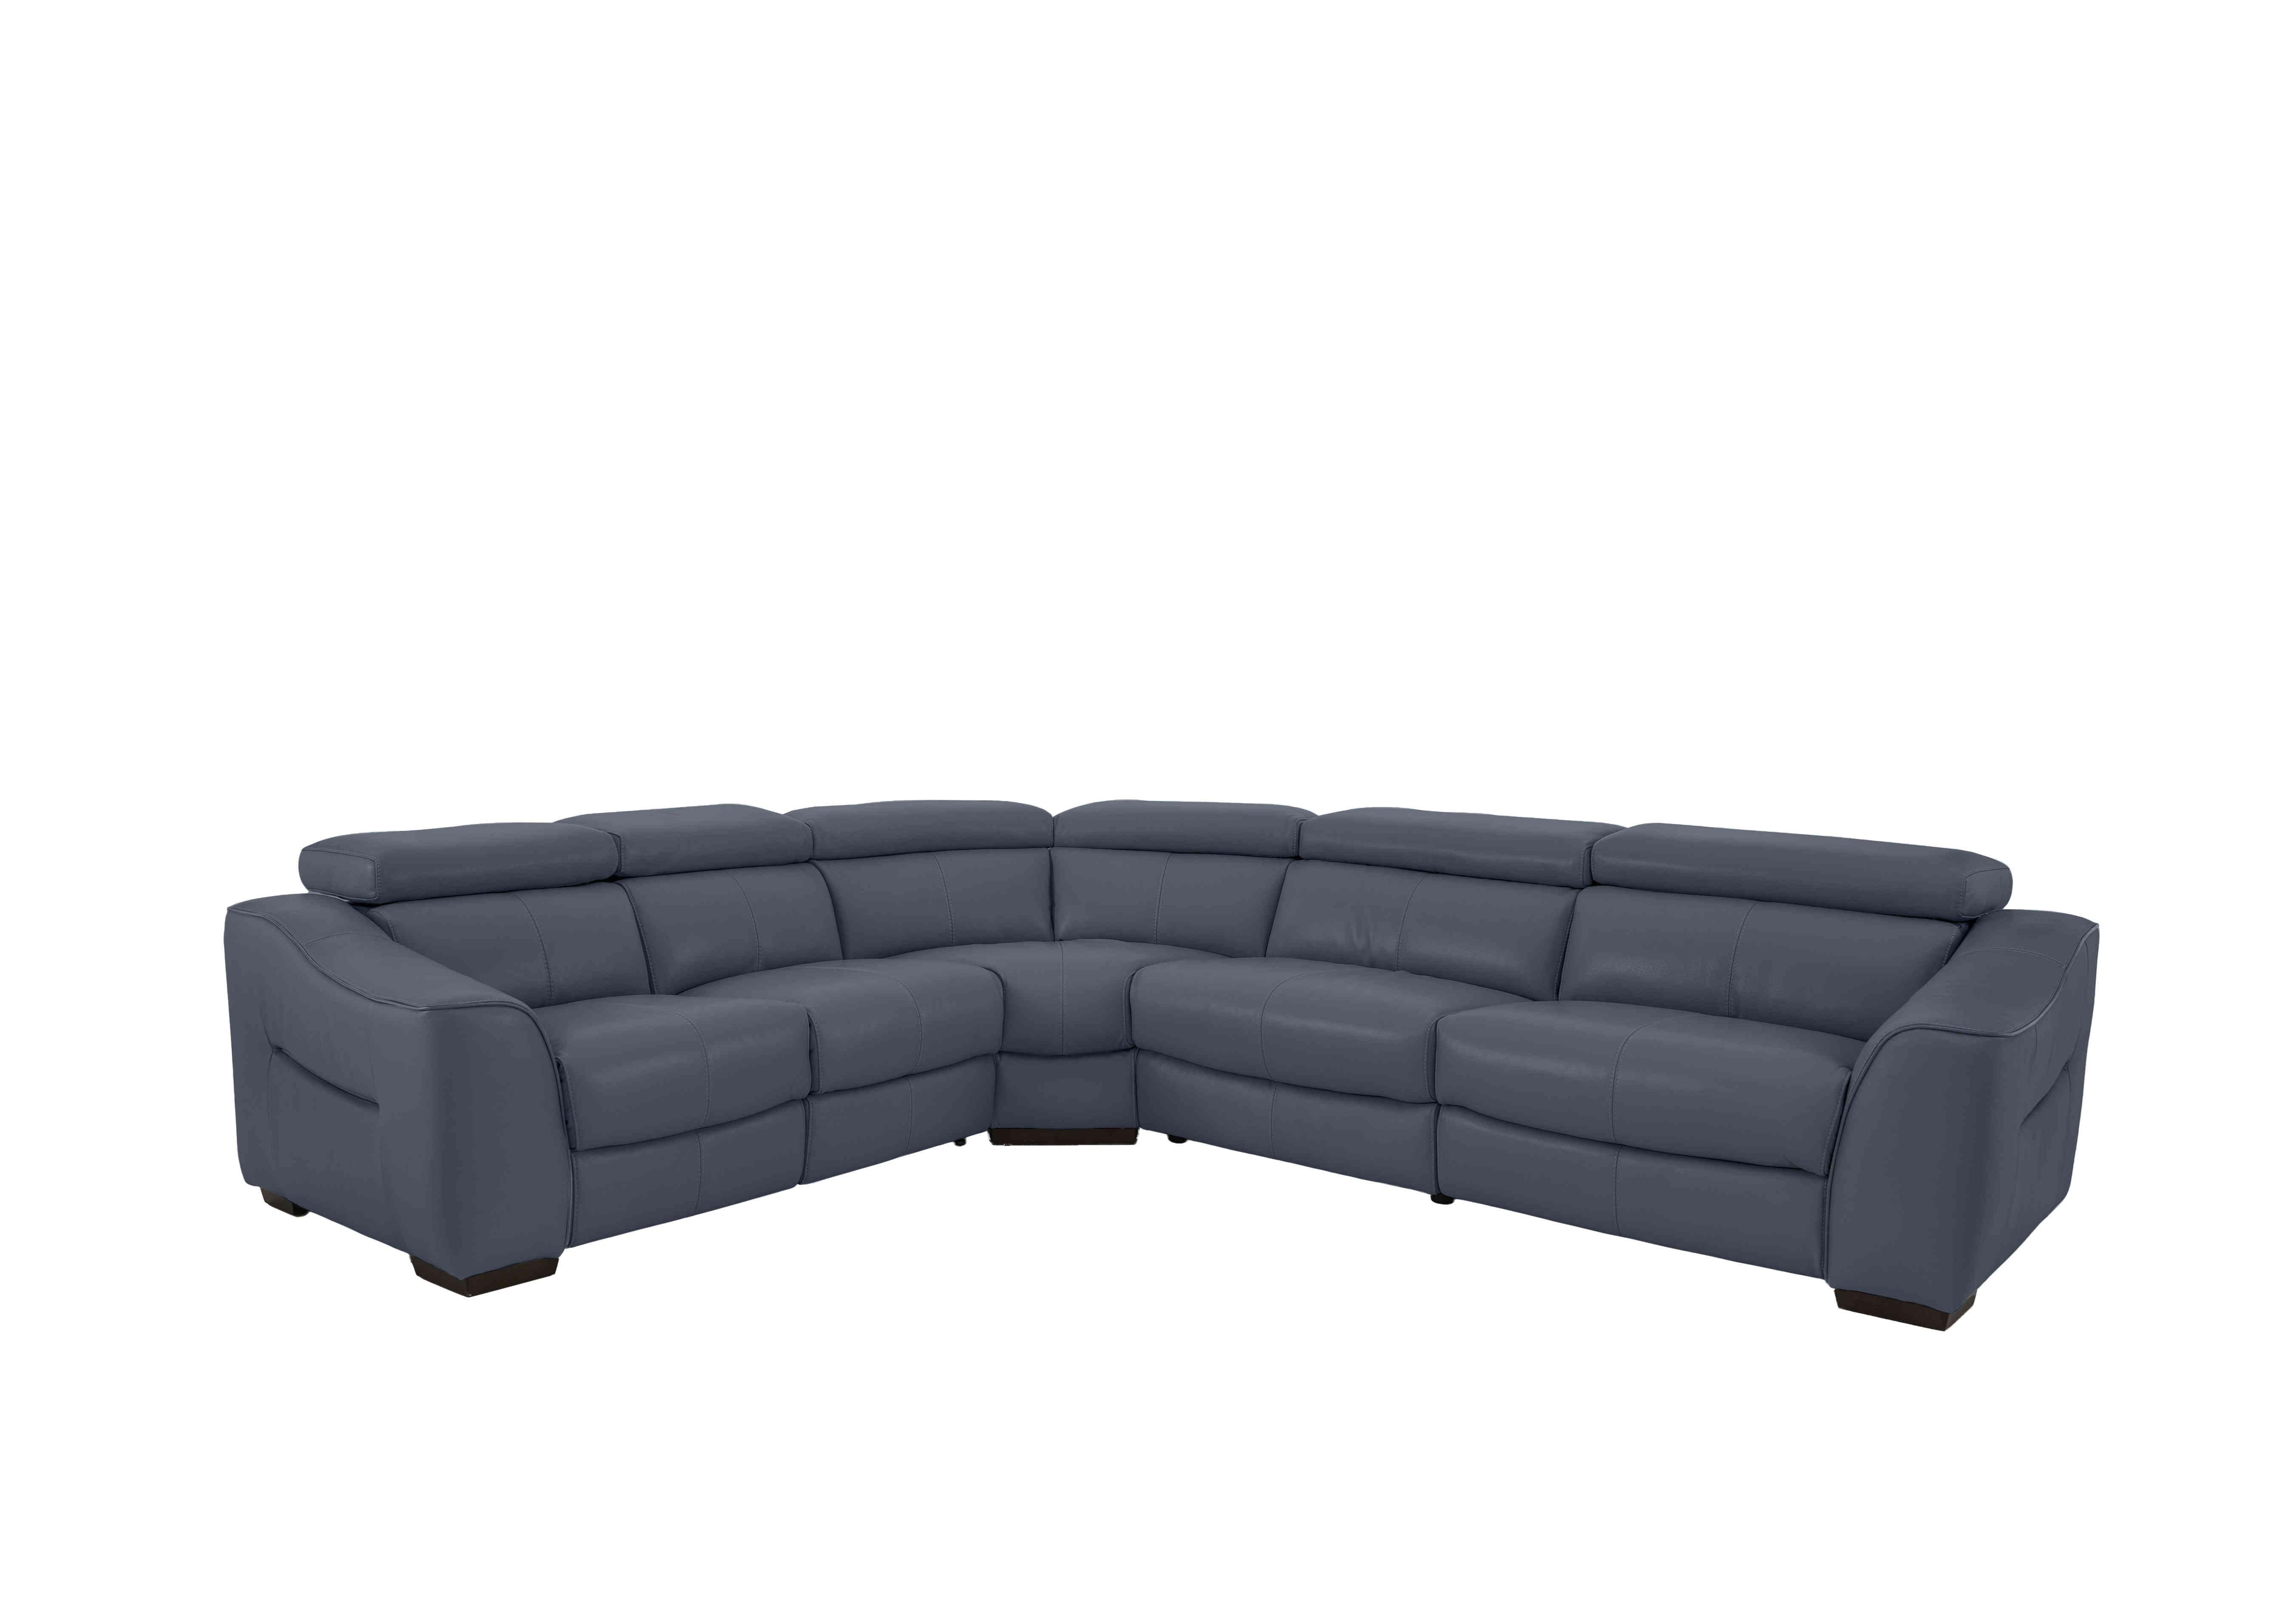 Elixir Leather Power Recliner Corner Sofa in Bv-313e Ocean Blue on Furniture Village